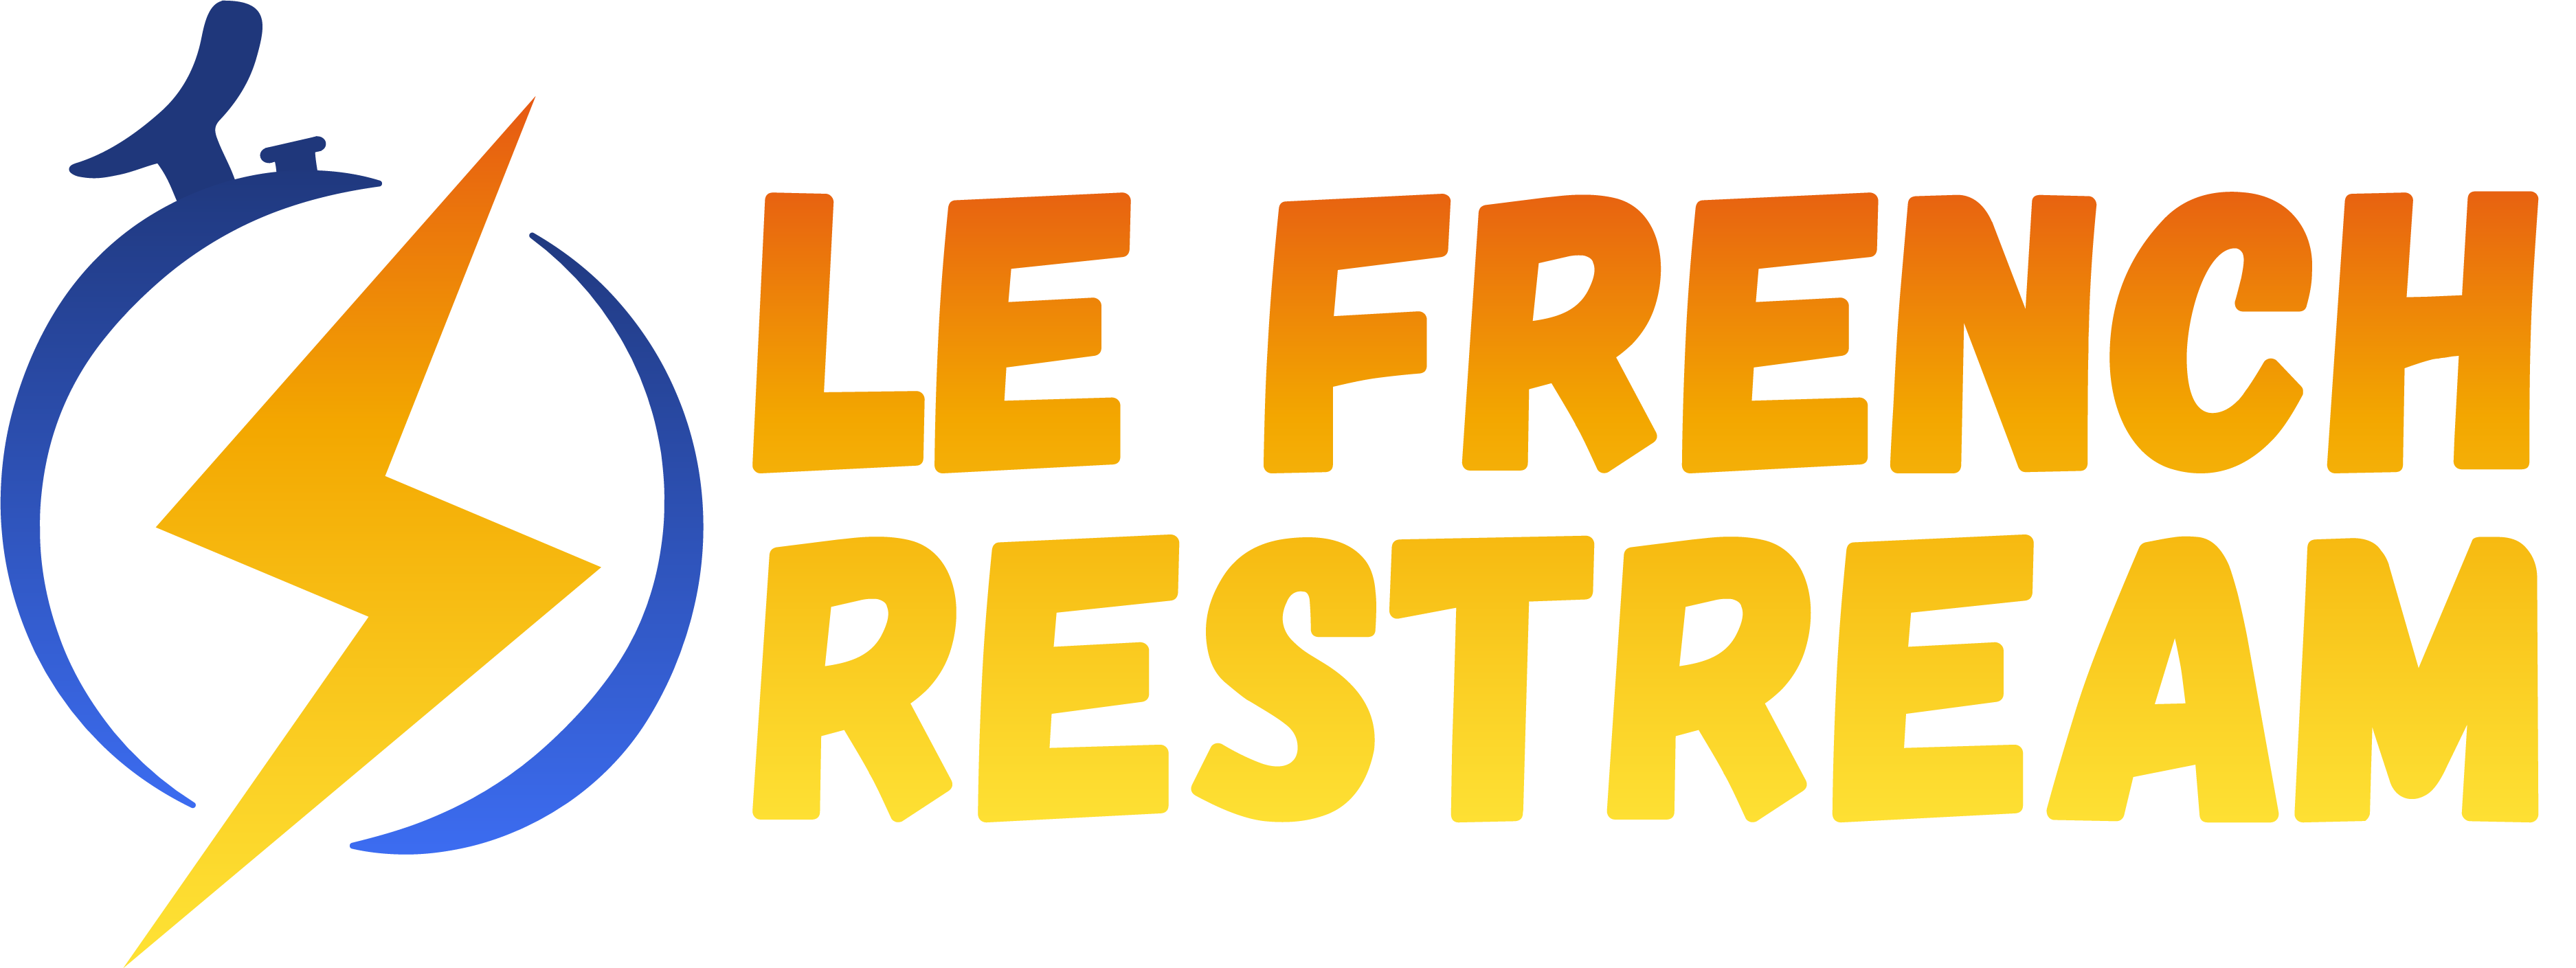 Le French Restream logo